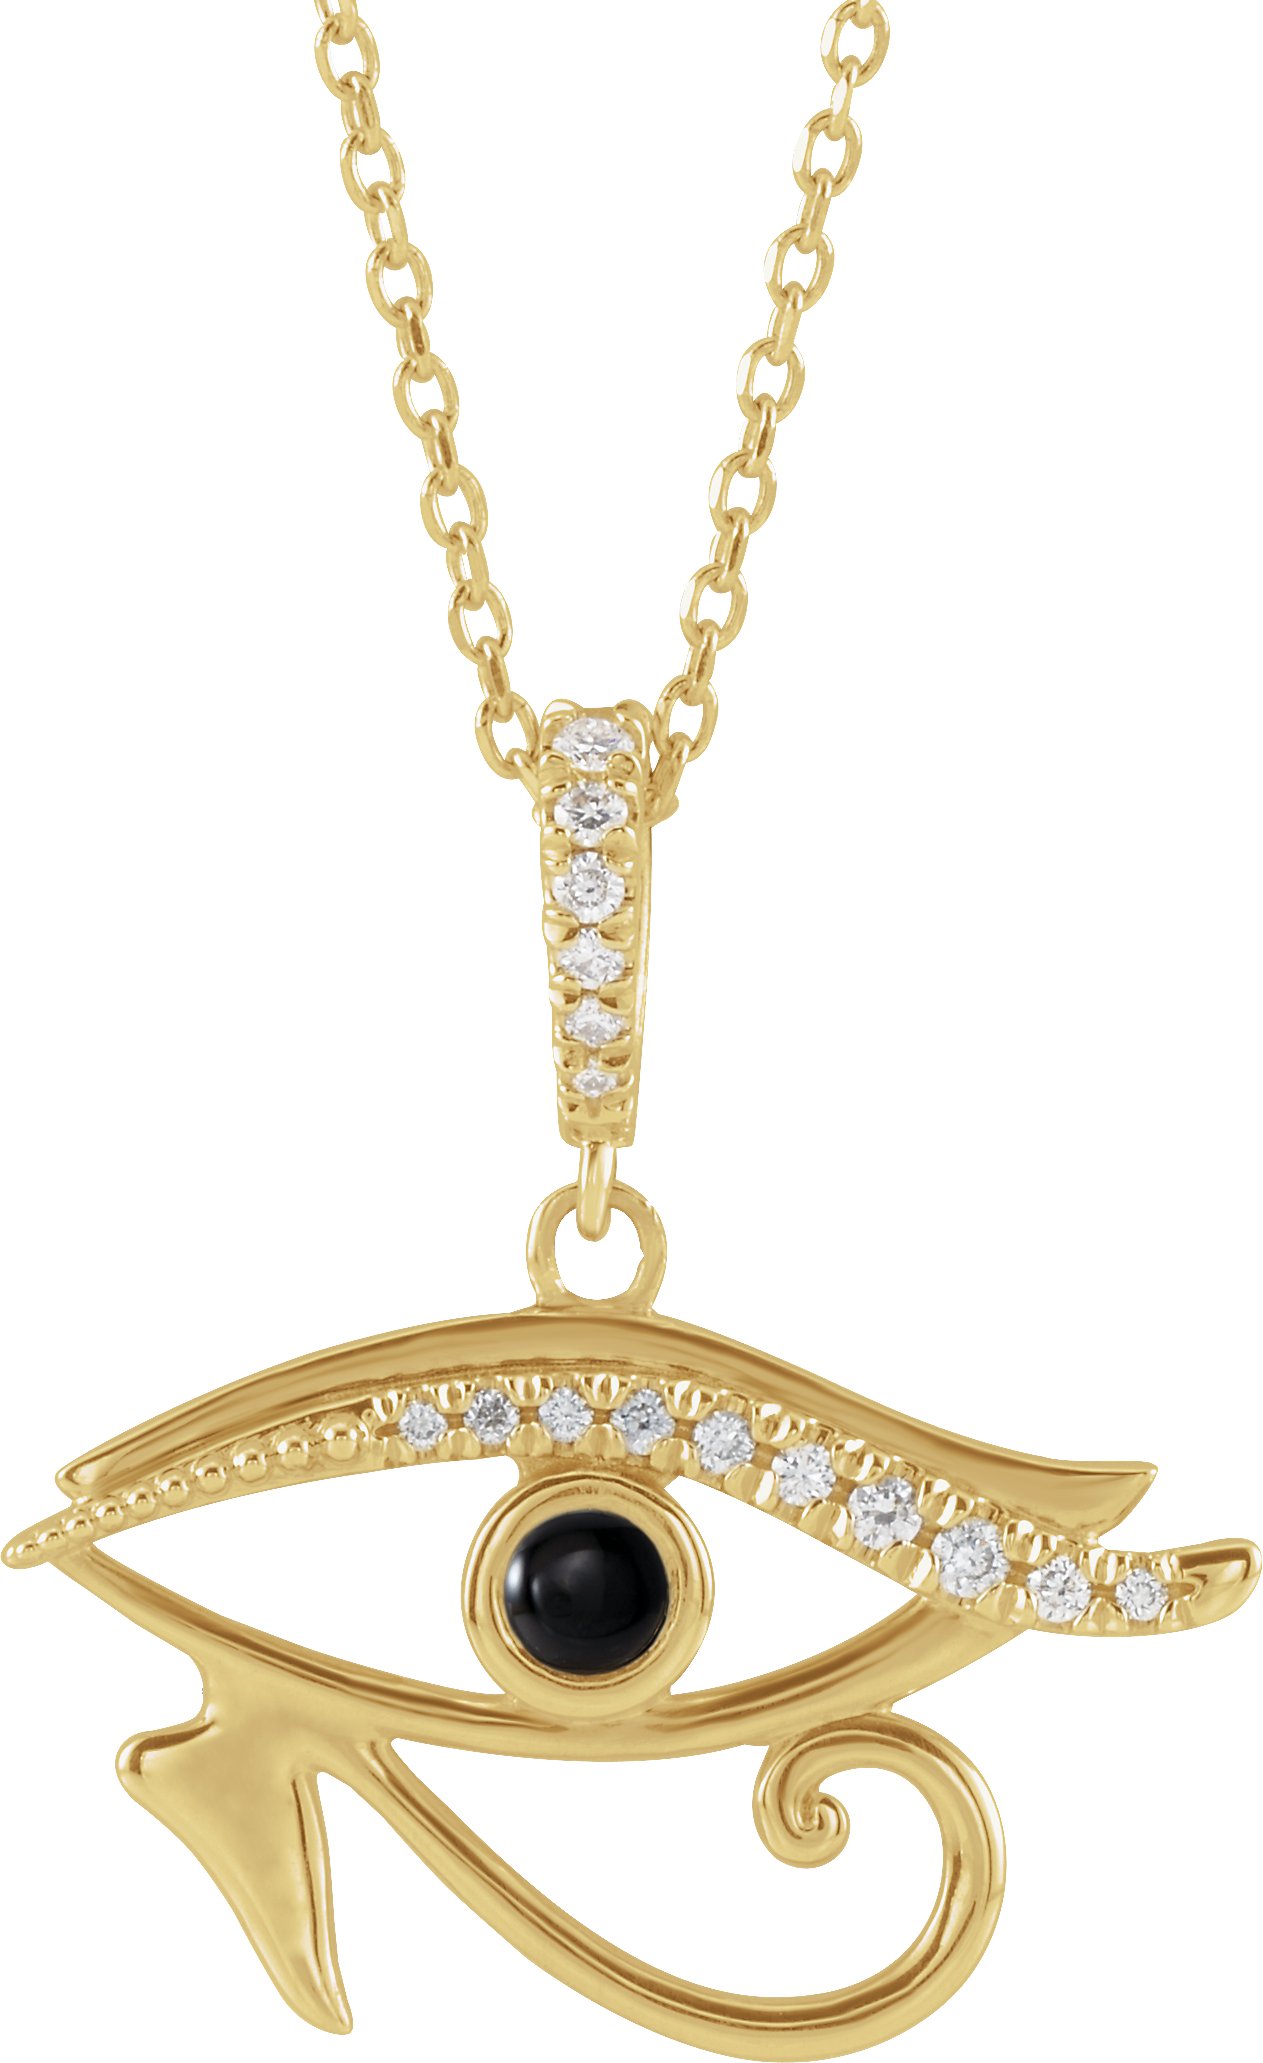 14K Yellow Natural Black Onyx & .08 CTW Natural Diamond Eye of Horus 16-18" Necklace